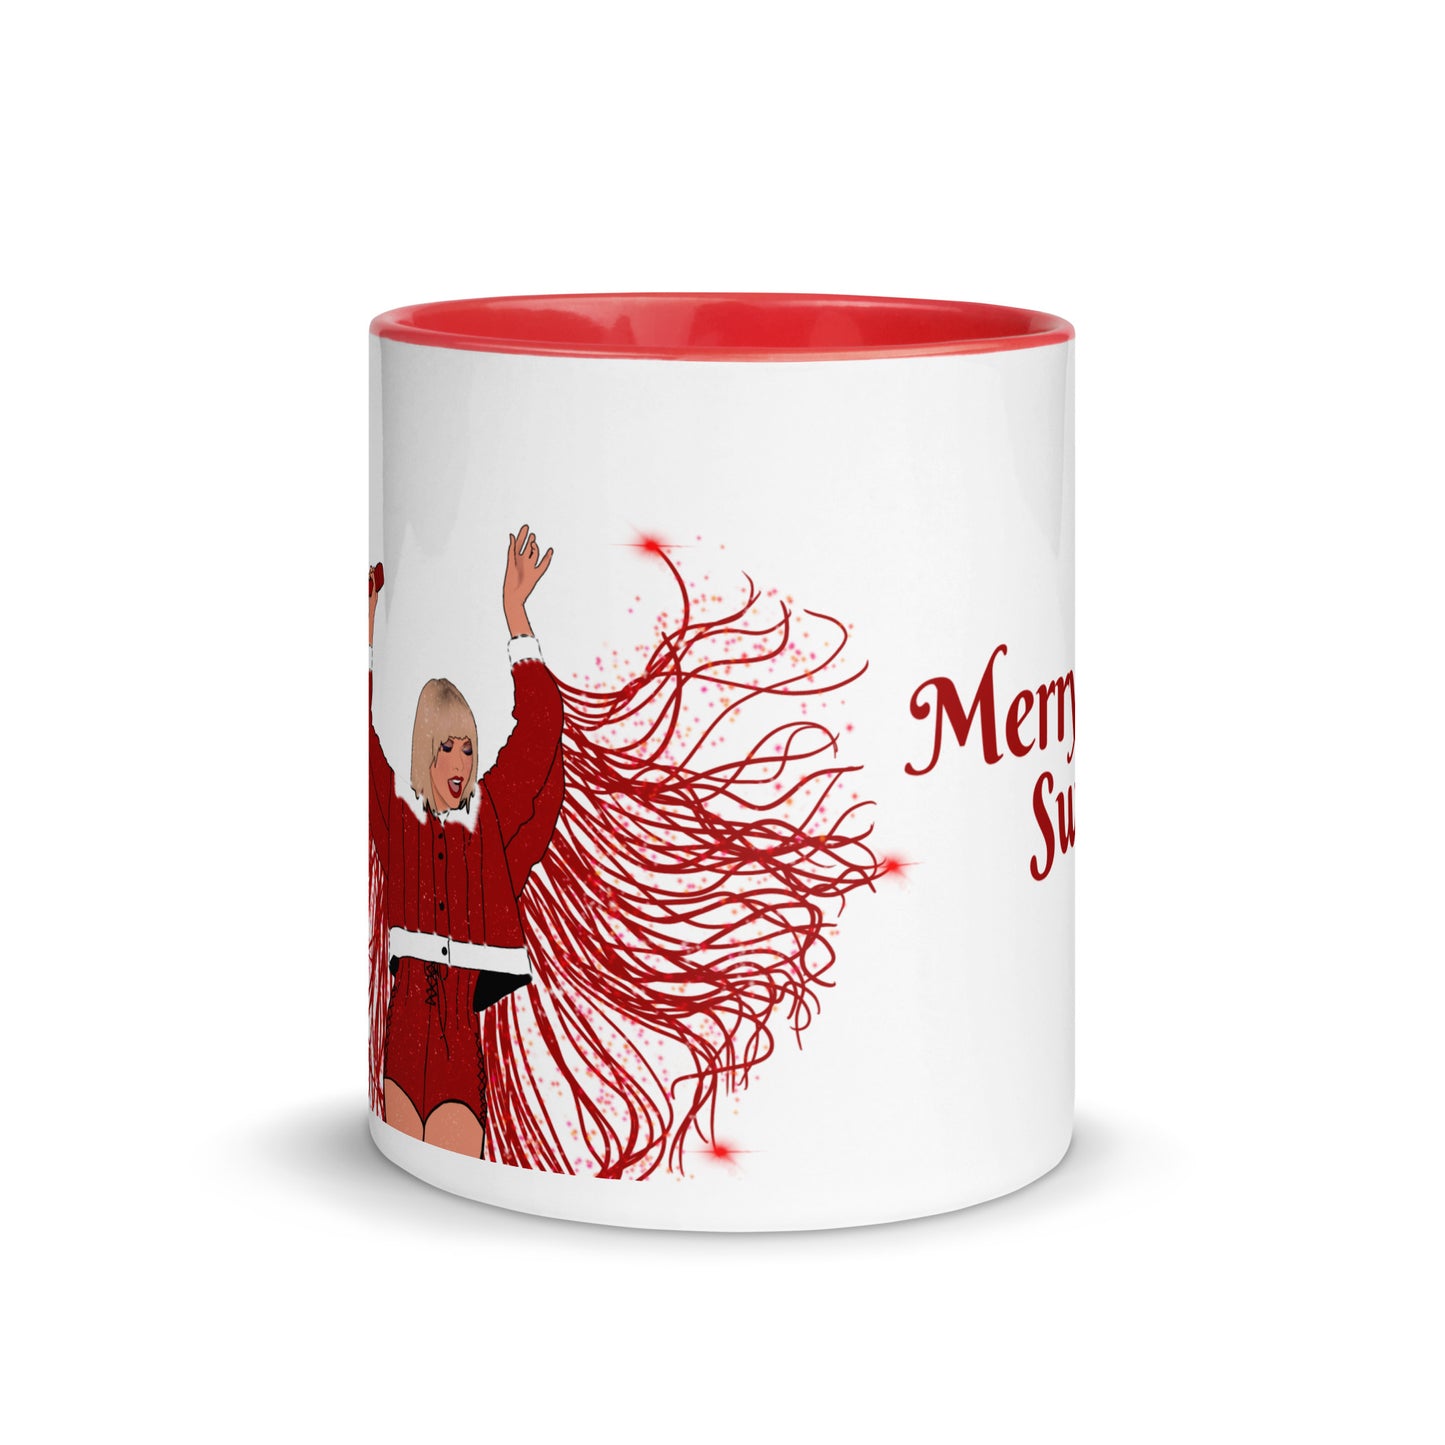 Merry SWIFTmas Mug